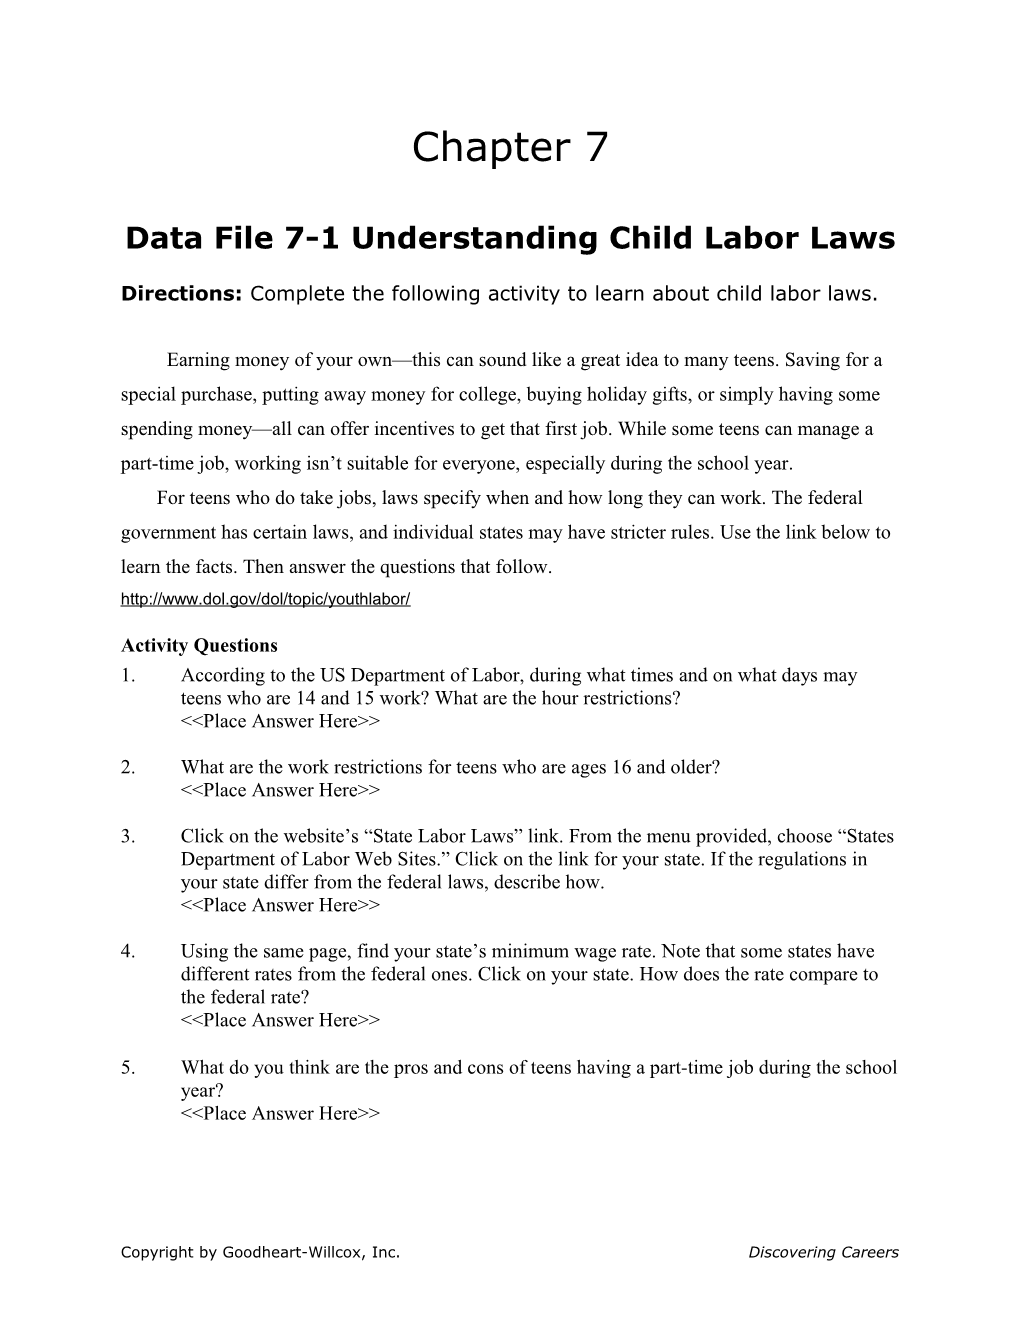 Data File 7-1 Understanding Child Labor Laws